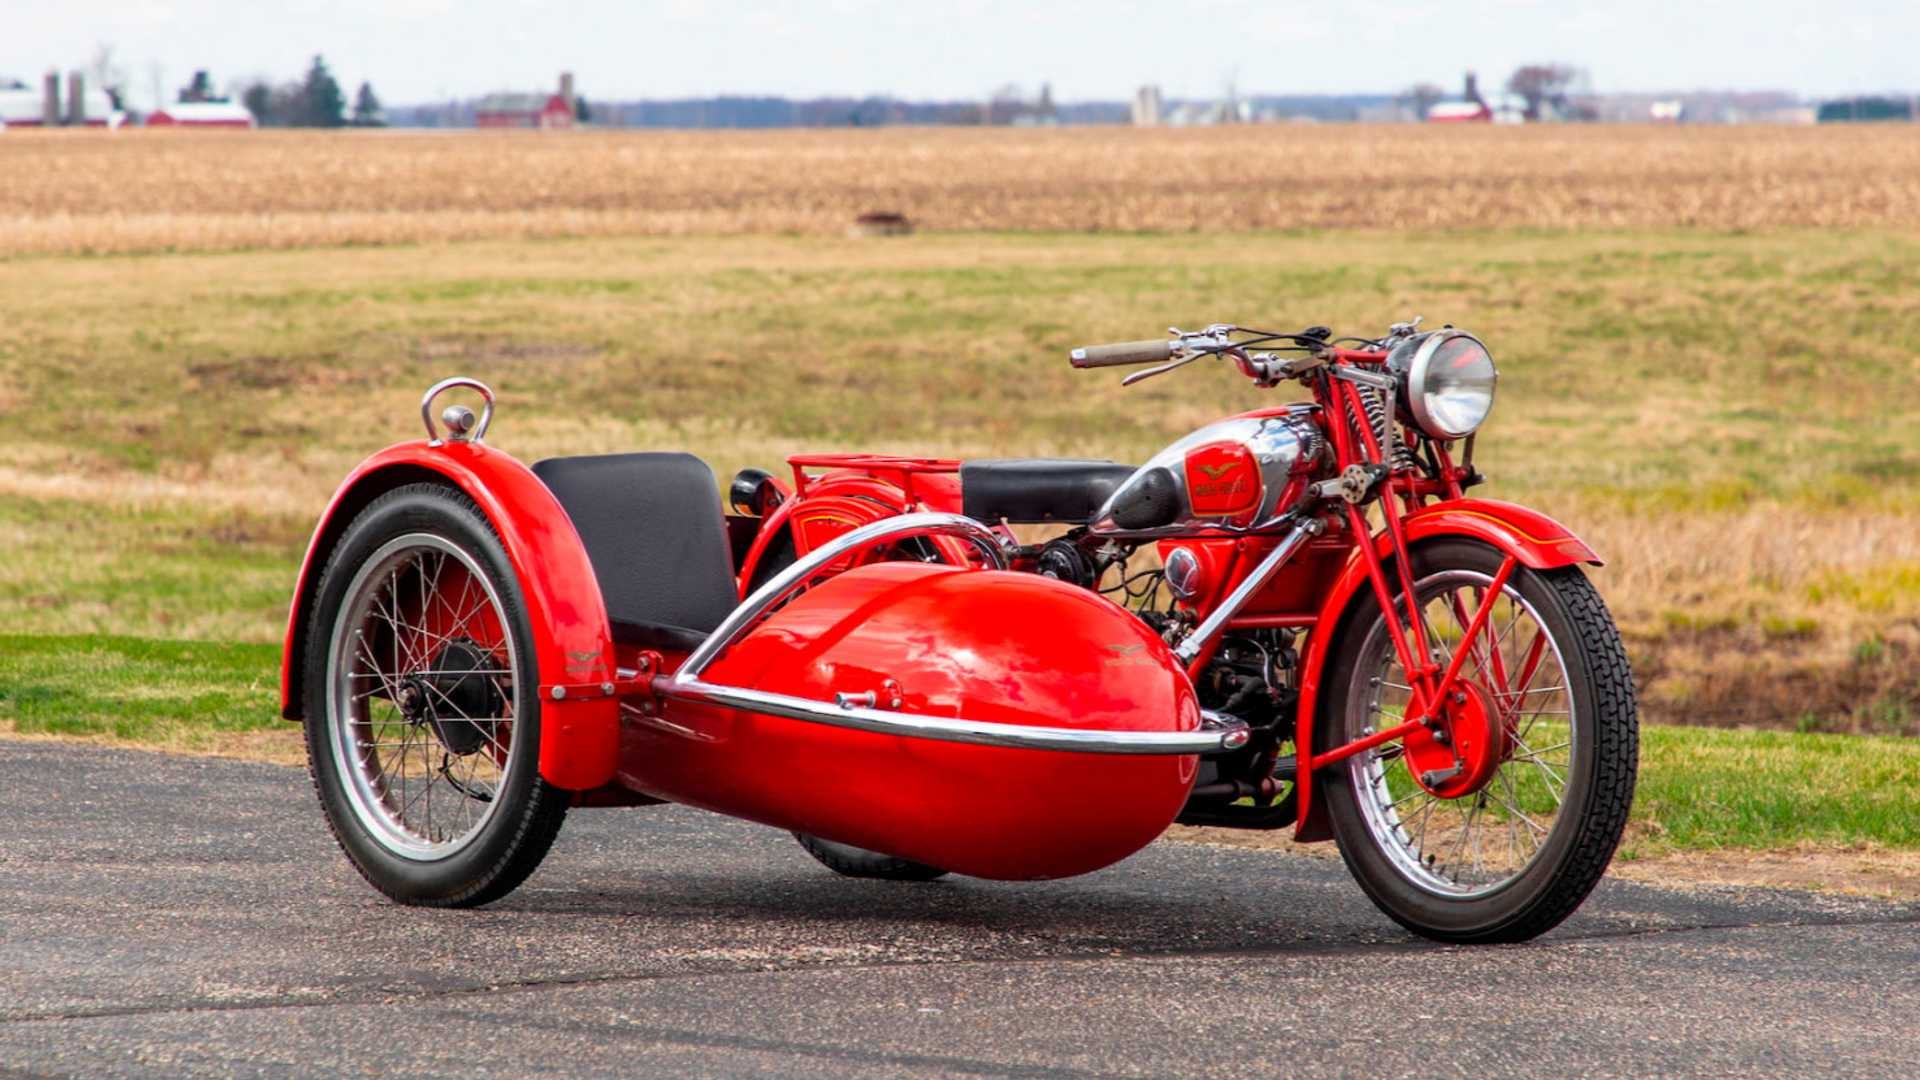 Moto Guzzi, Auction soon, Sidecar rig, Century of motorcycles, 1920x1080 Full HD Desktop